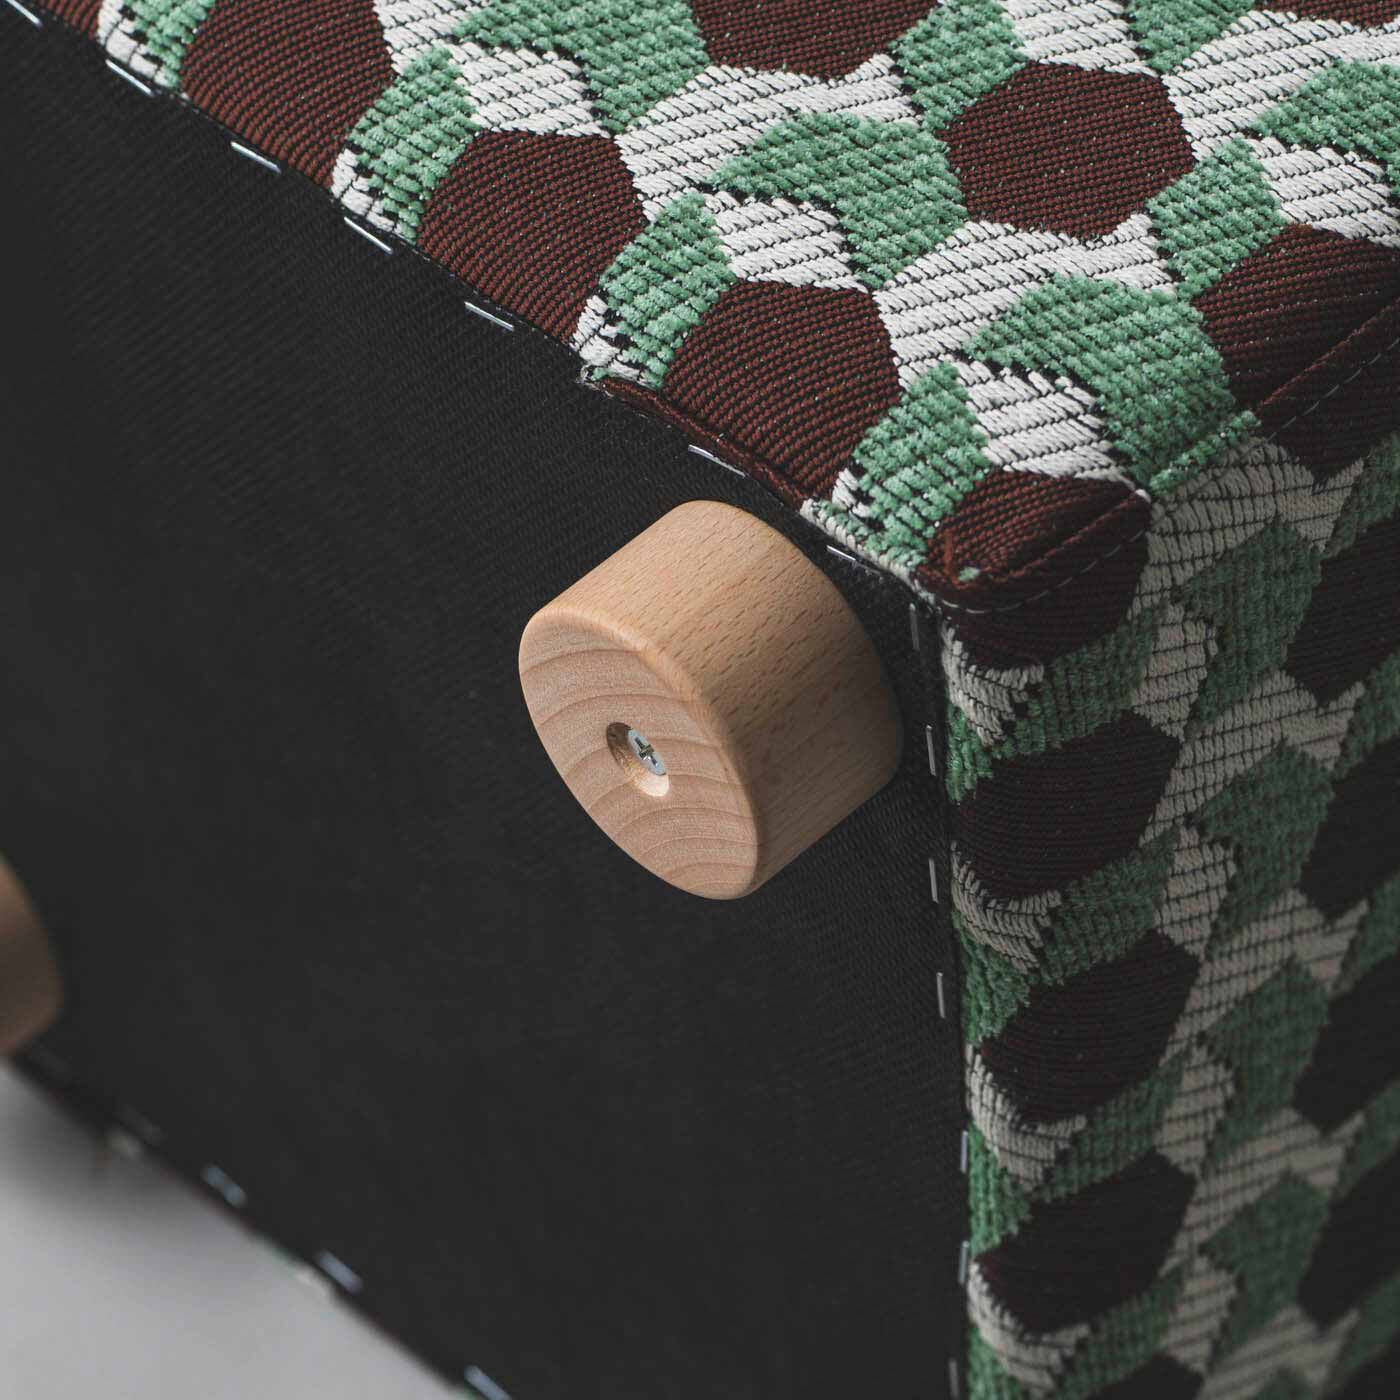 ＆Stories|テキスタイルデザイナーと家具職人が作った 播州ジャカード織のスツール〈チョコミント色〉|付属のフェルトシートを貼ってご使用いただけます。